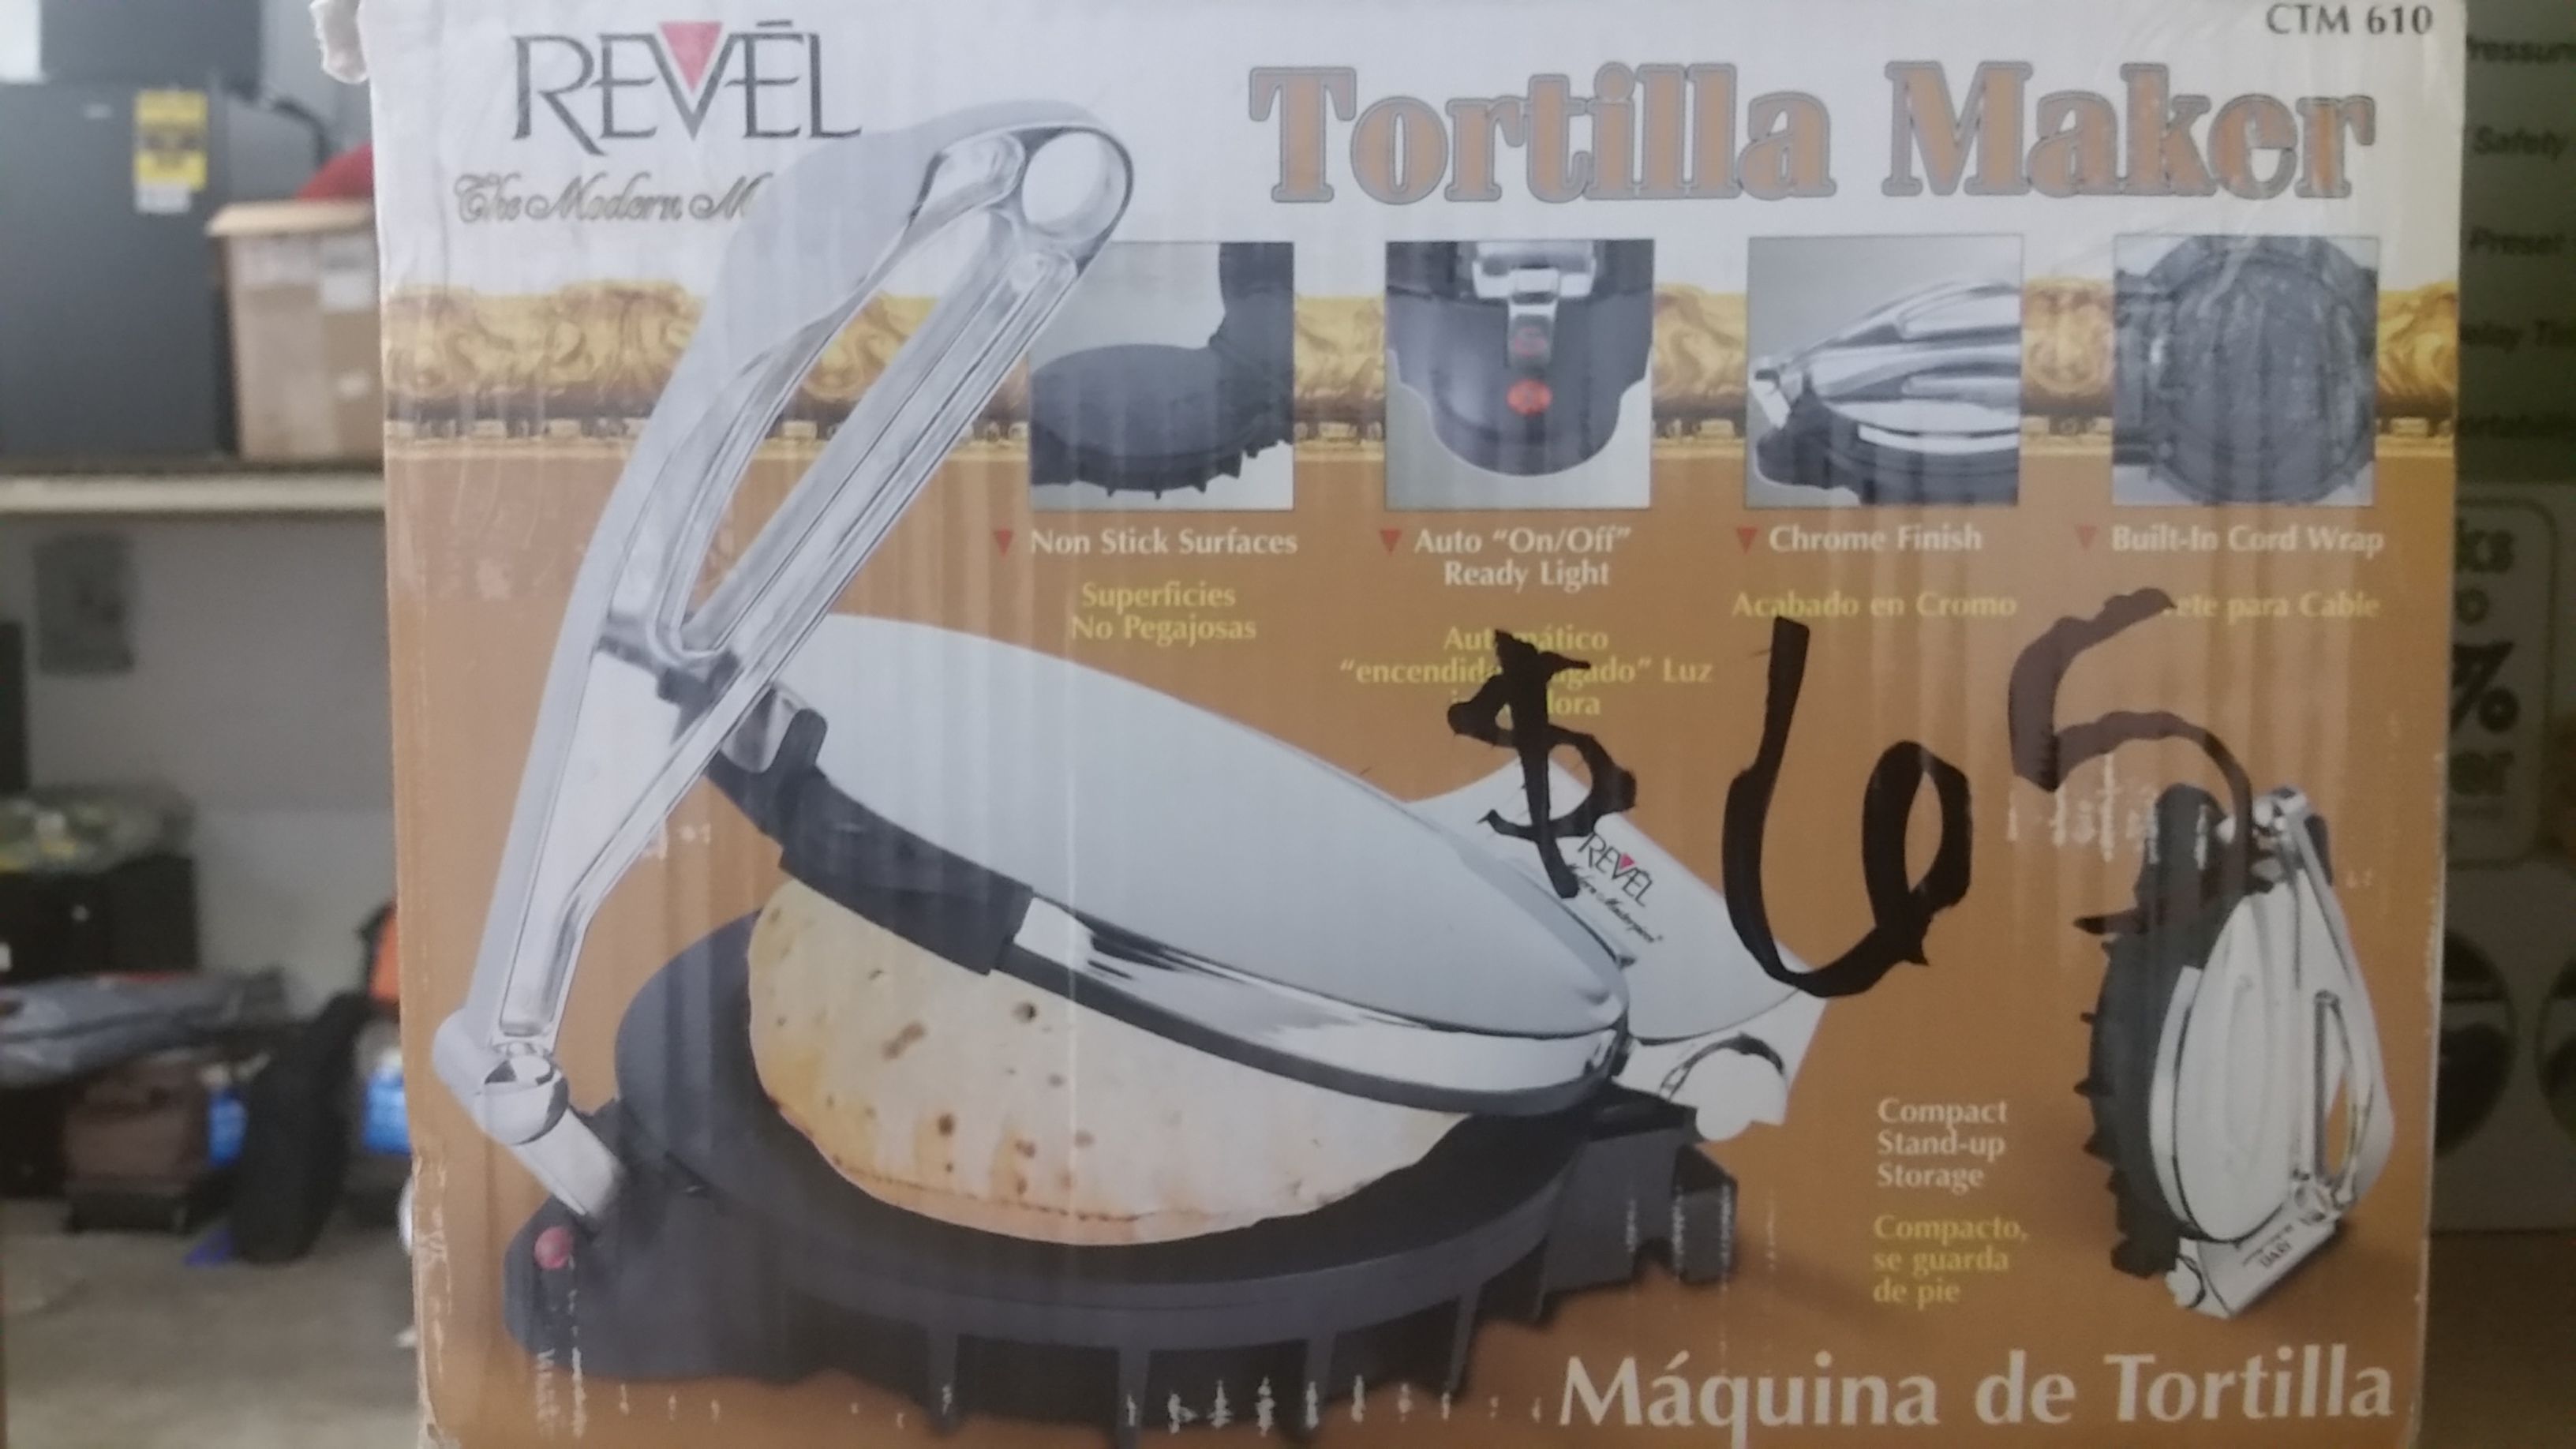 Tortilla maker new in box